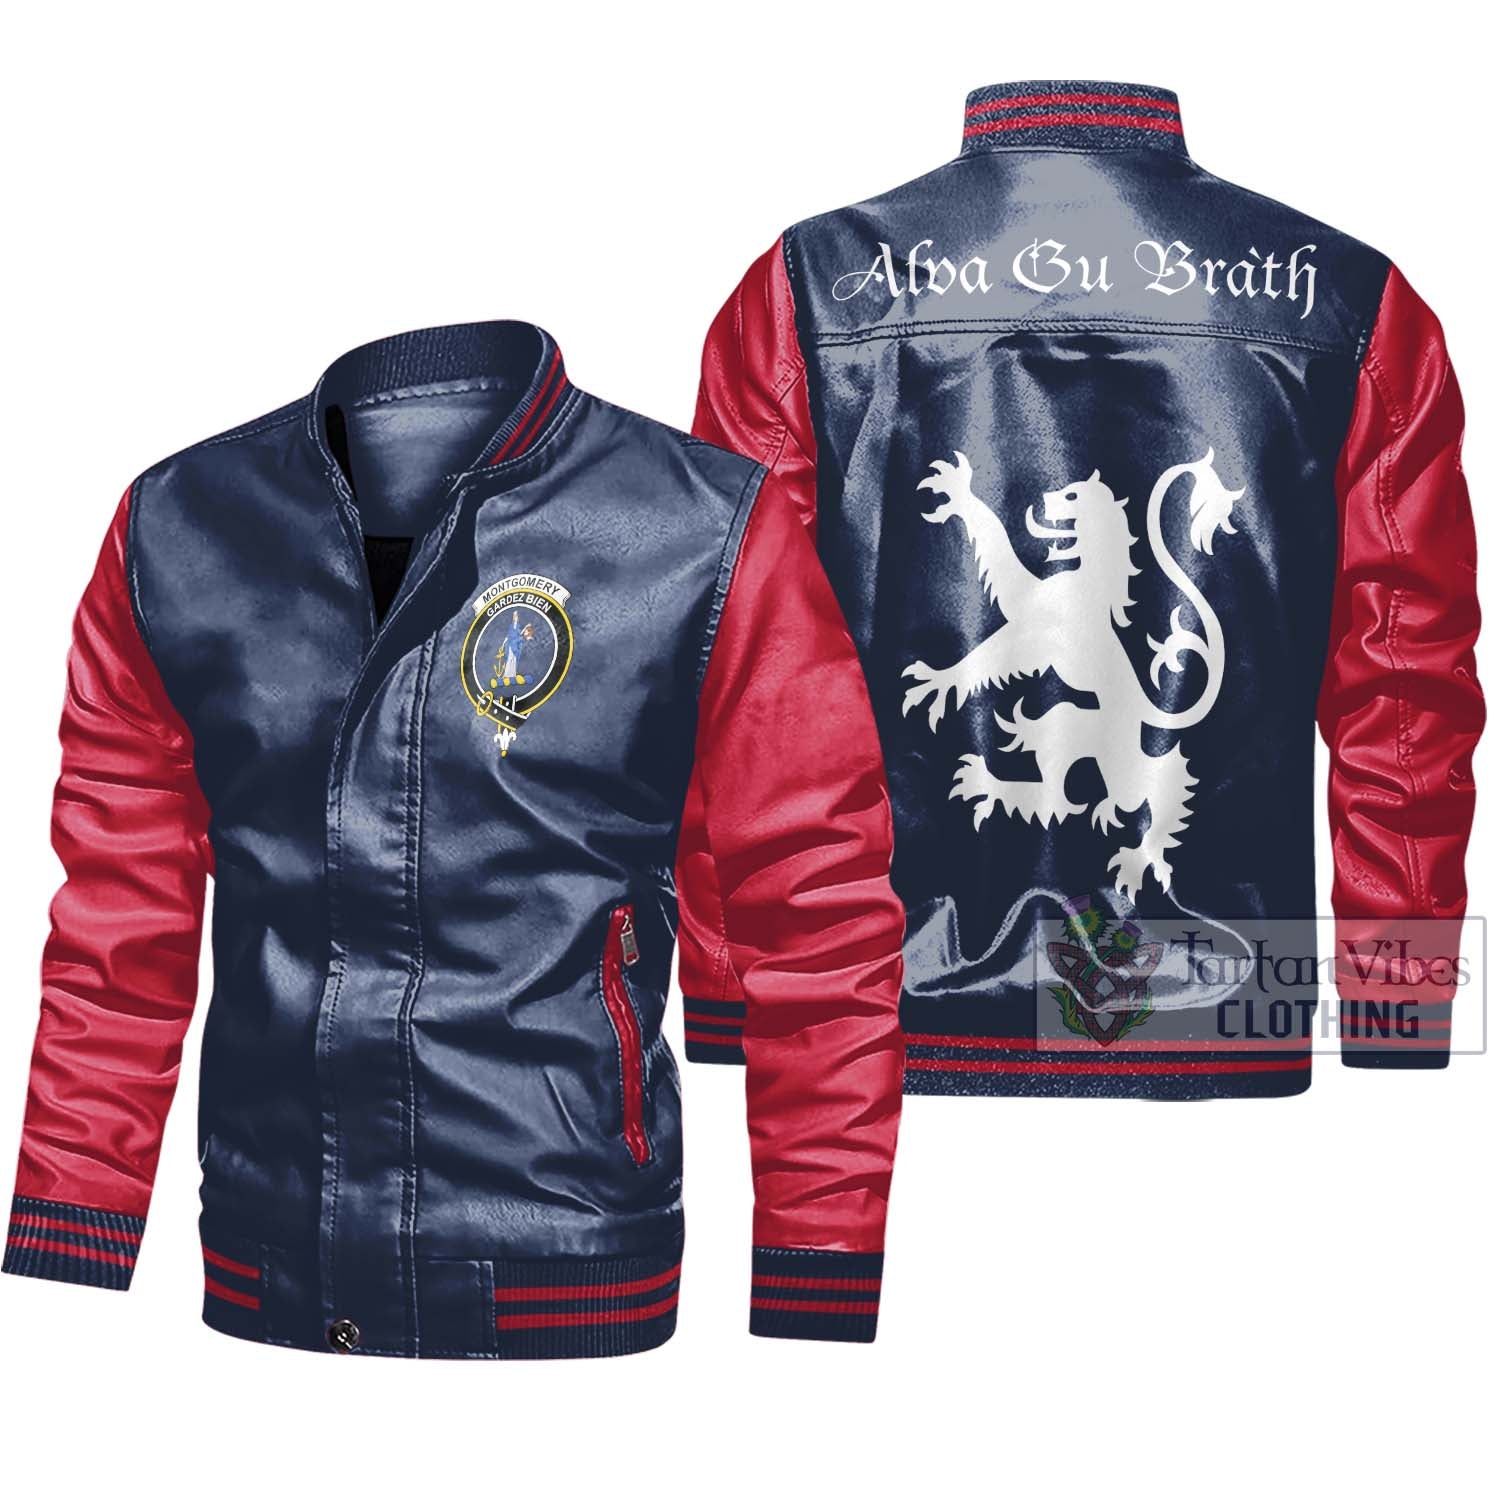 Tartan Vibes Clothing Montgomery Family Crest Leather Bomber Jacket Lion Rampant Alba Gu Brath Style